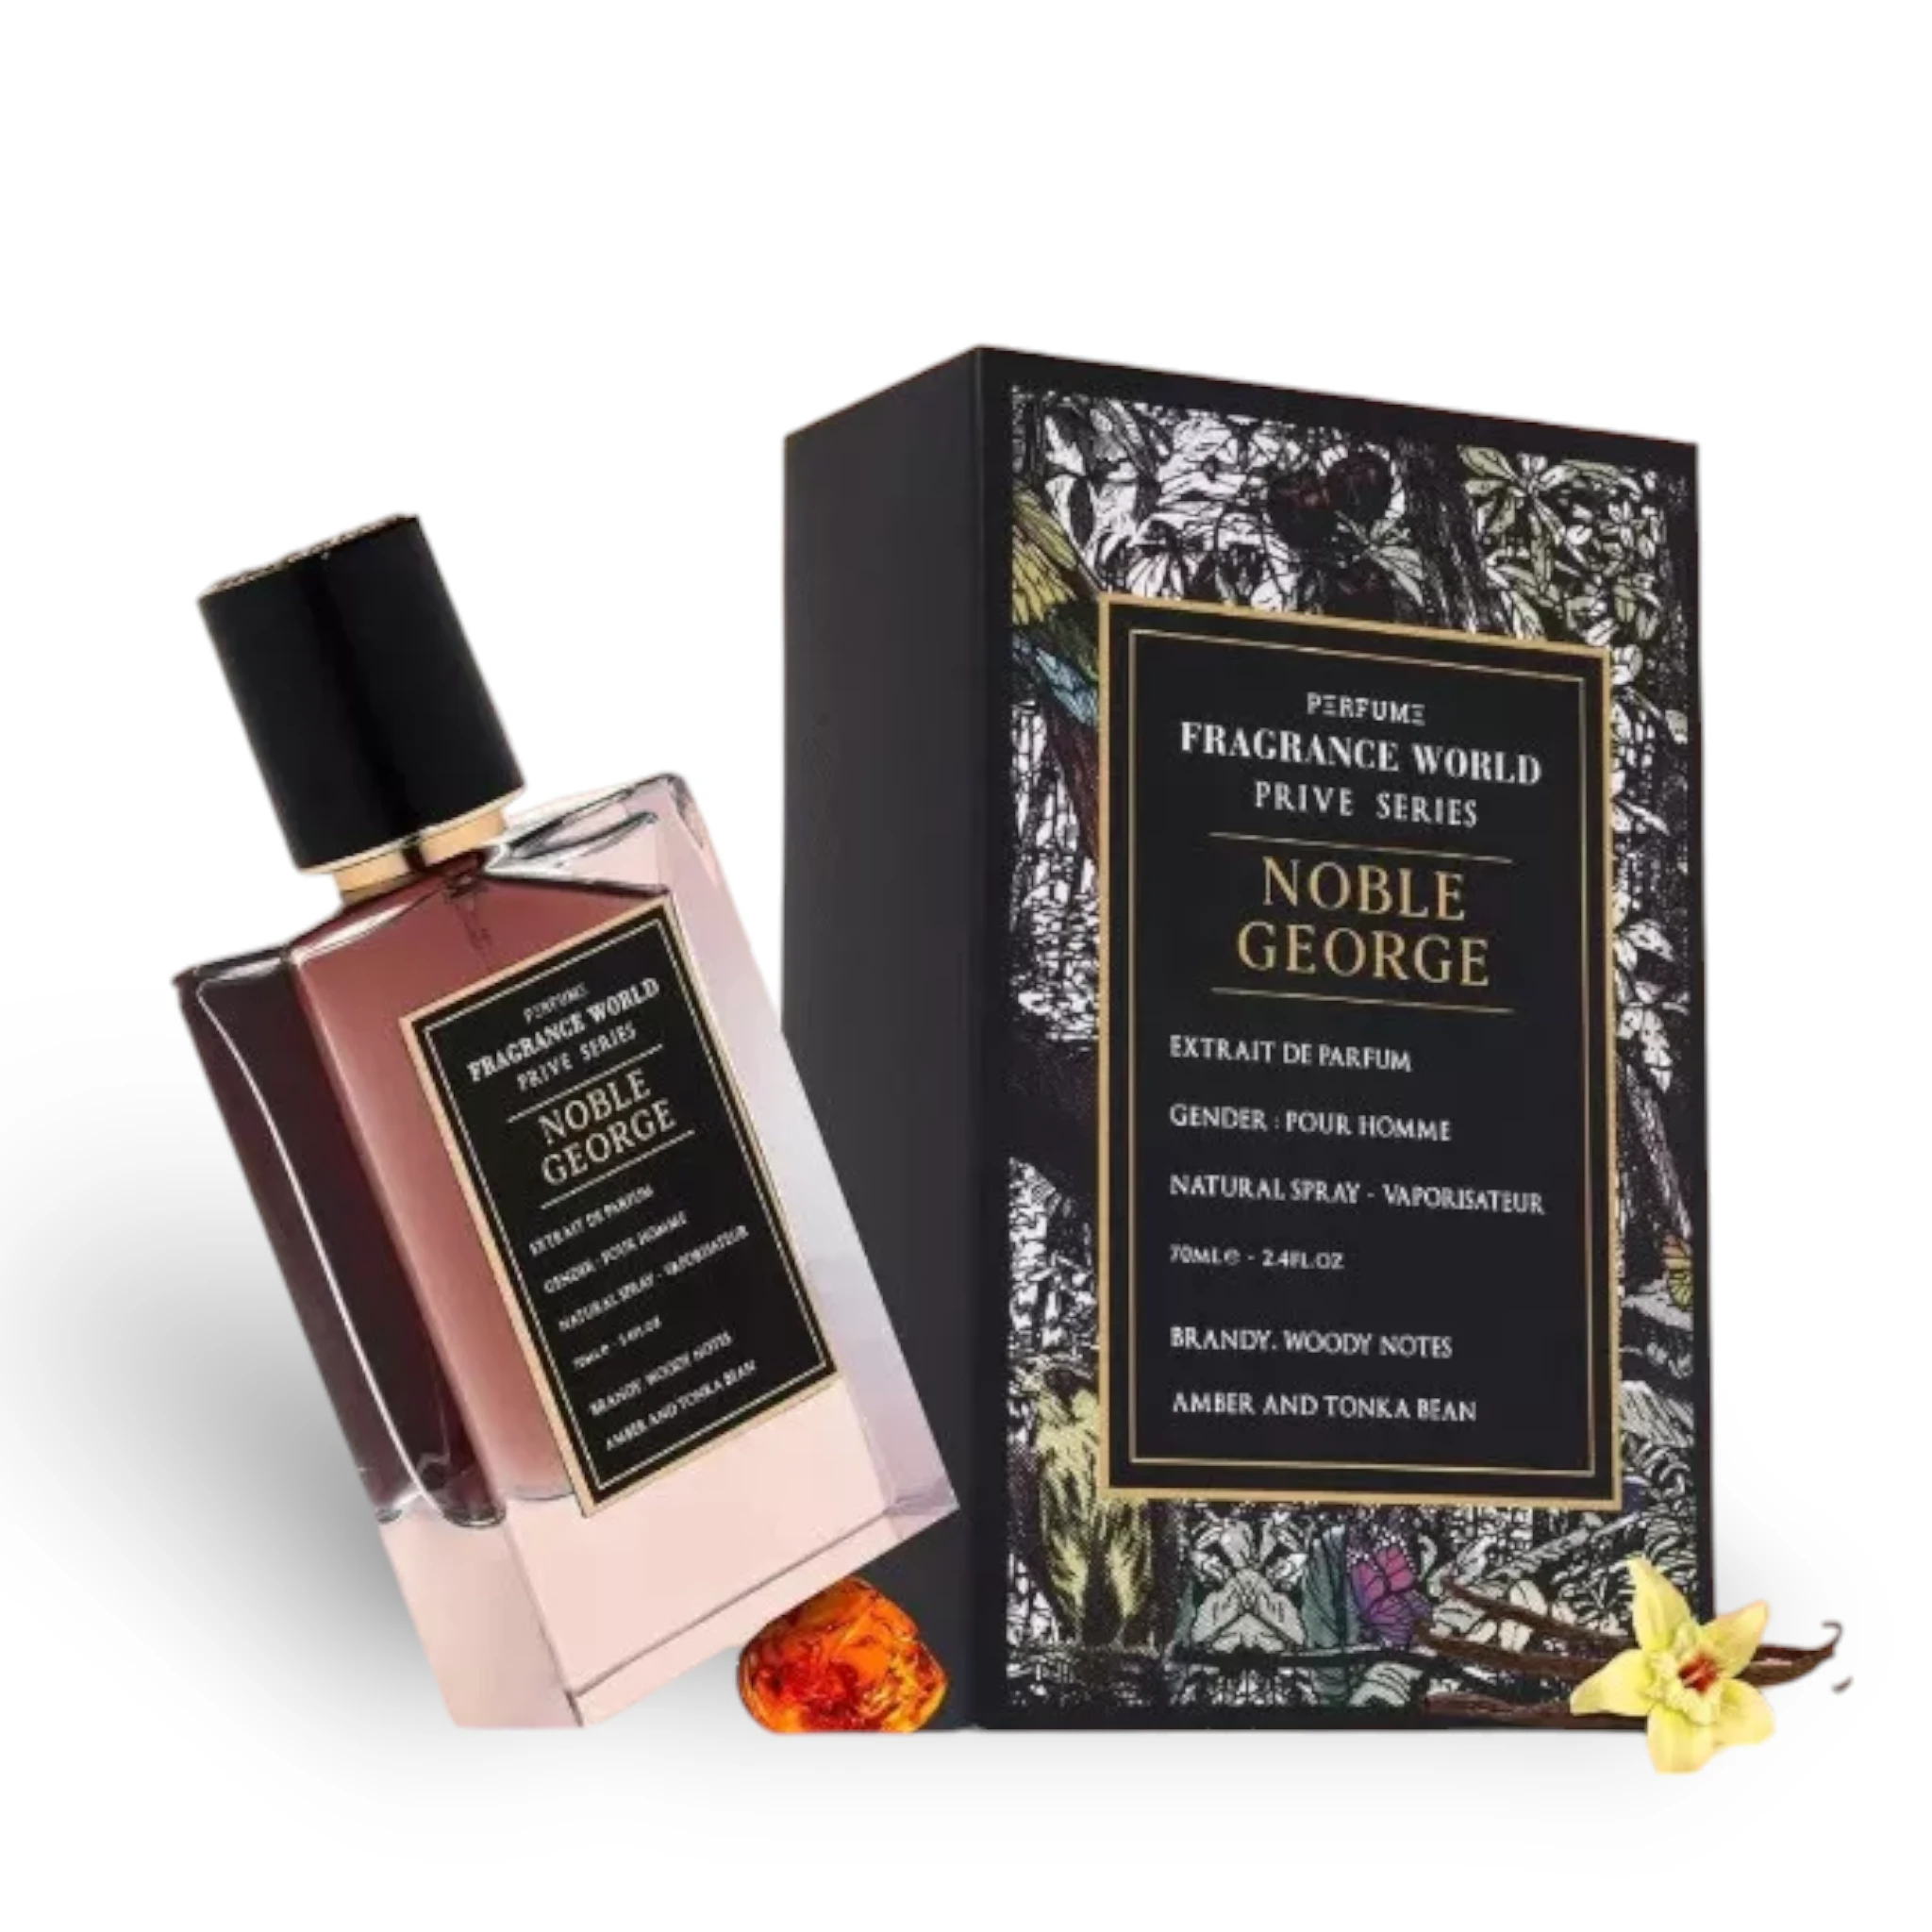 Noble George (Prive Series) Perfume Eau De Parfum 70Ml By Fragrance World